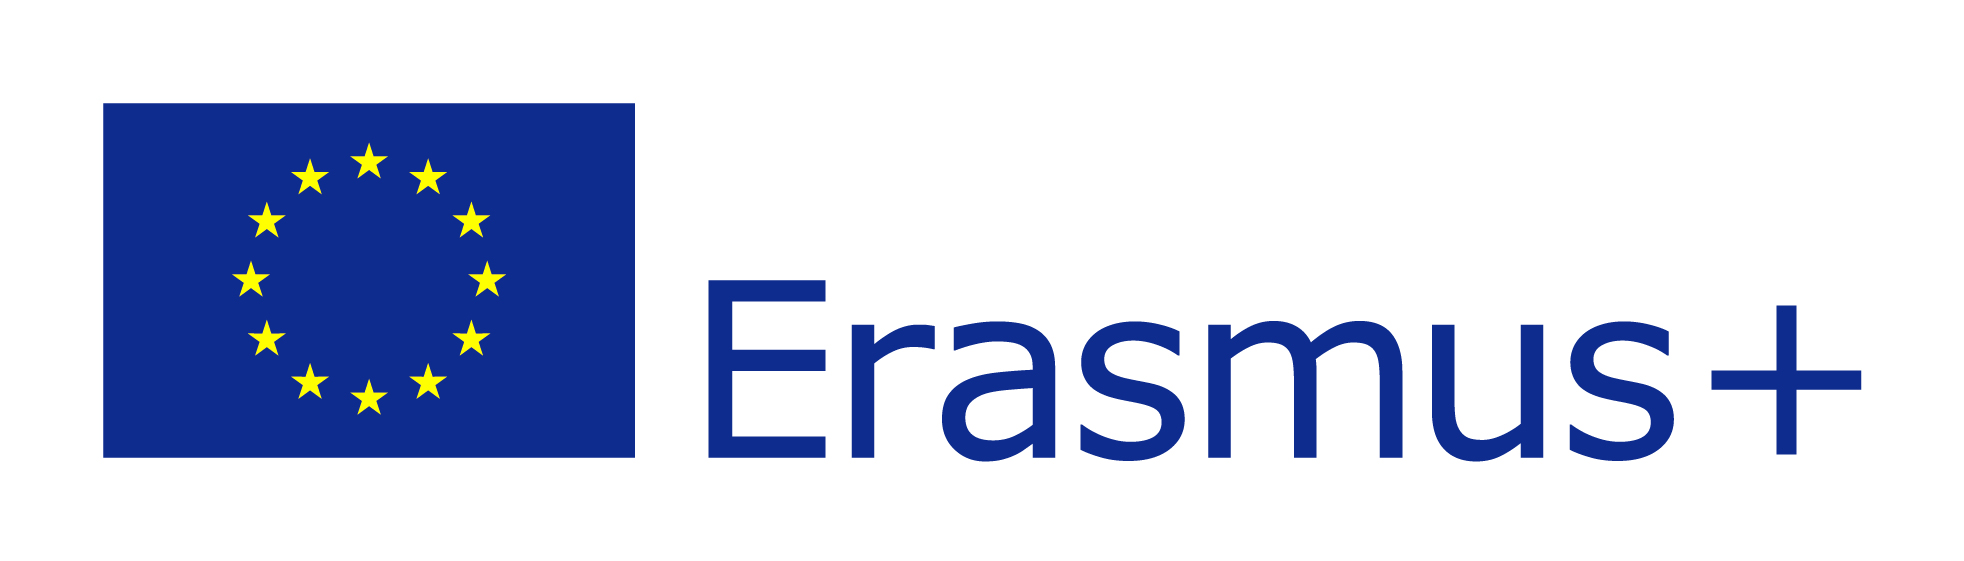 Erasmus Logo photo - 1